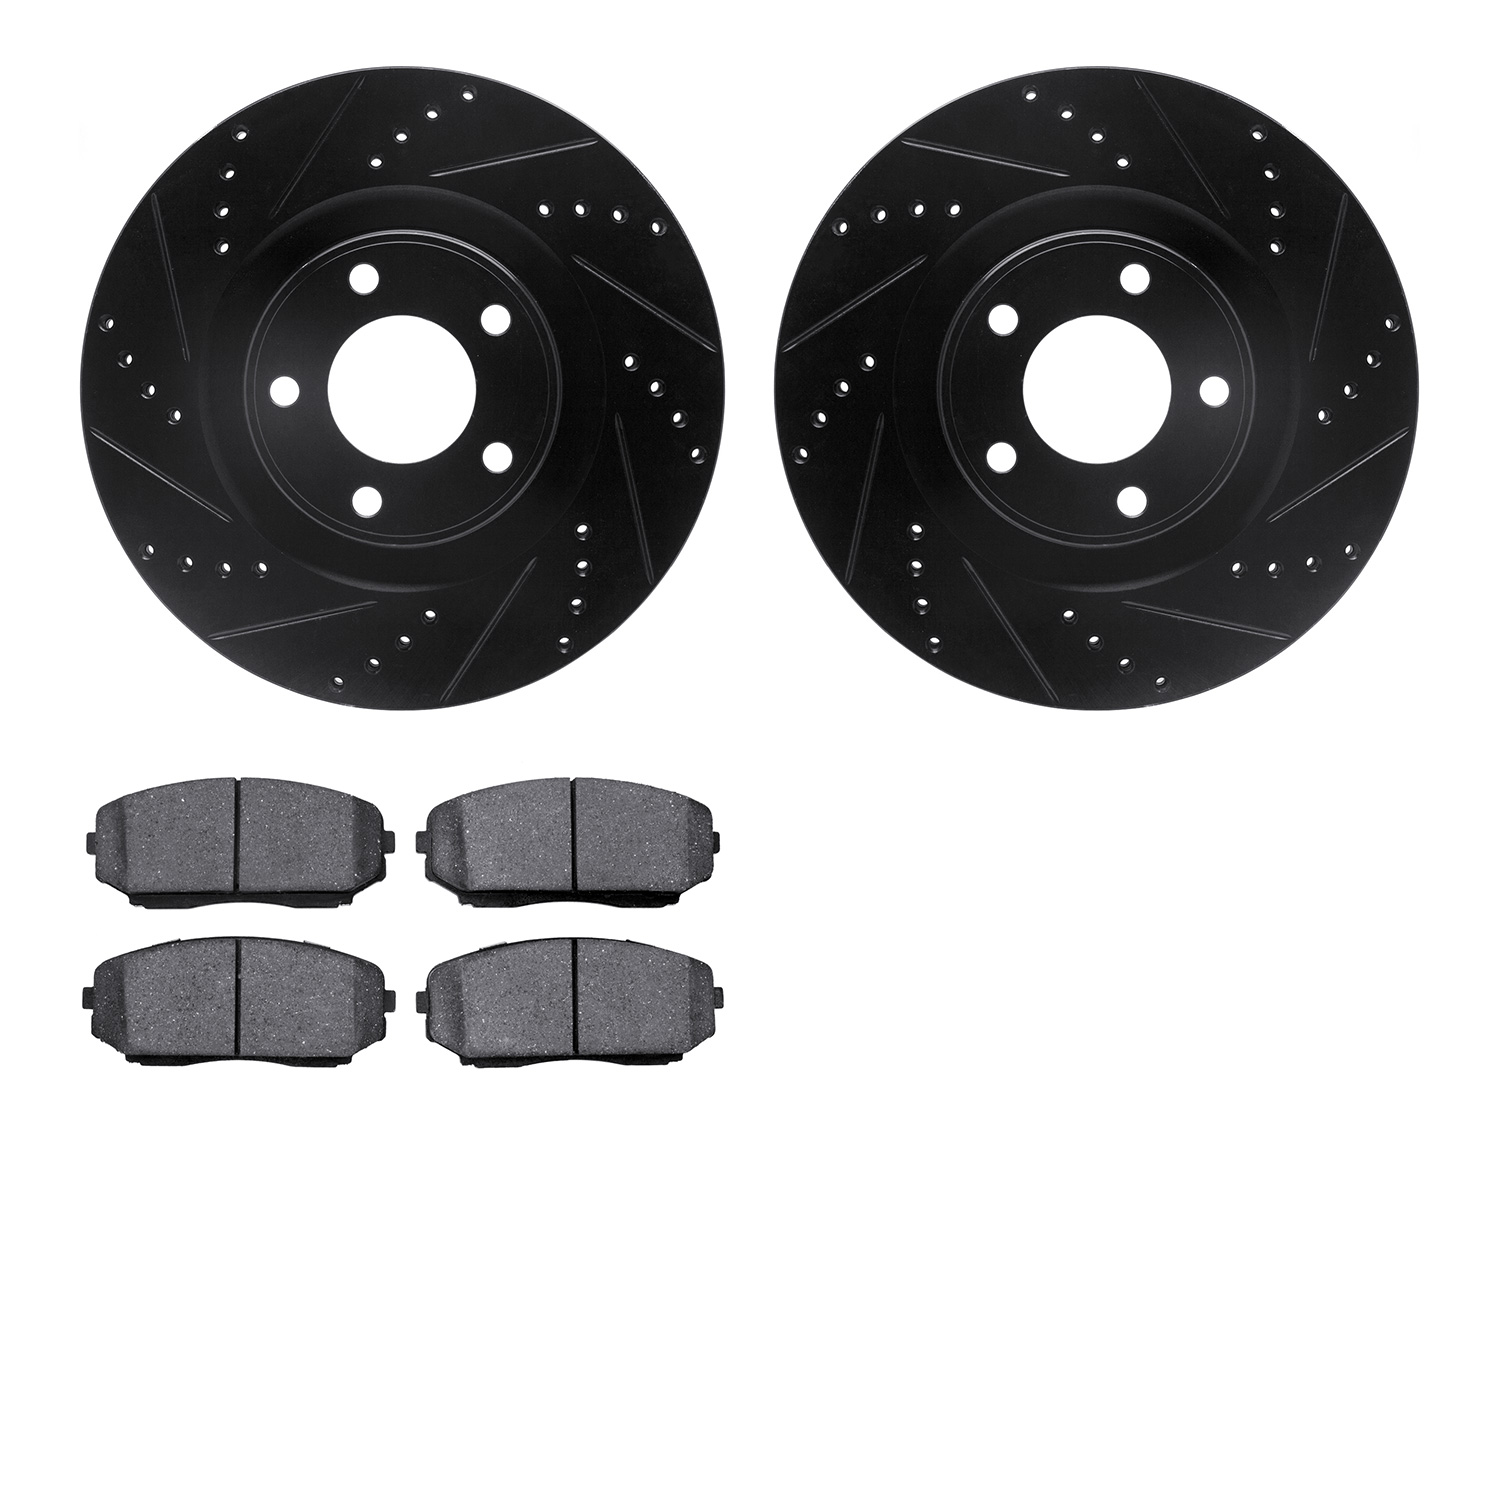 8302-54188 Drilled/Slotted Brake Rotors with 3000-Series Ceramic Brake Pads Kit [Black], 2007-2015 Ford/Lincoln/Mercury/Mazda, P